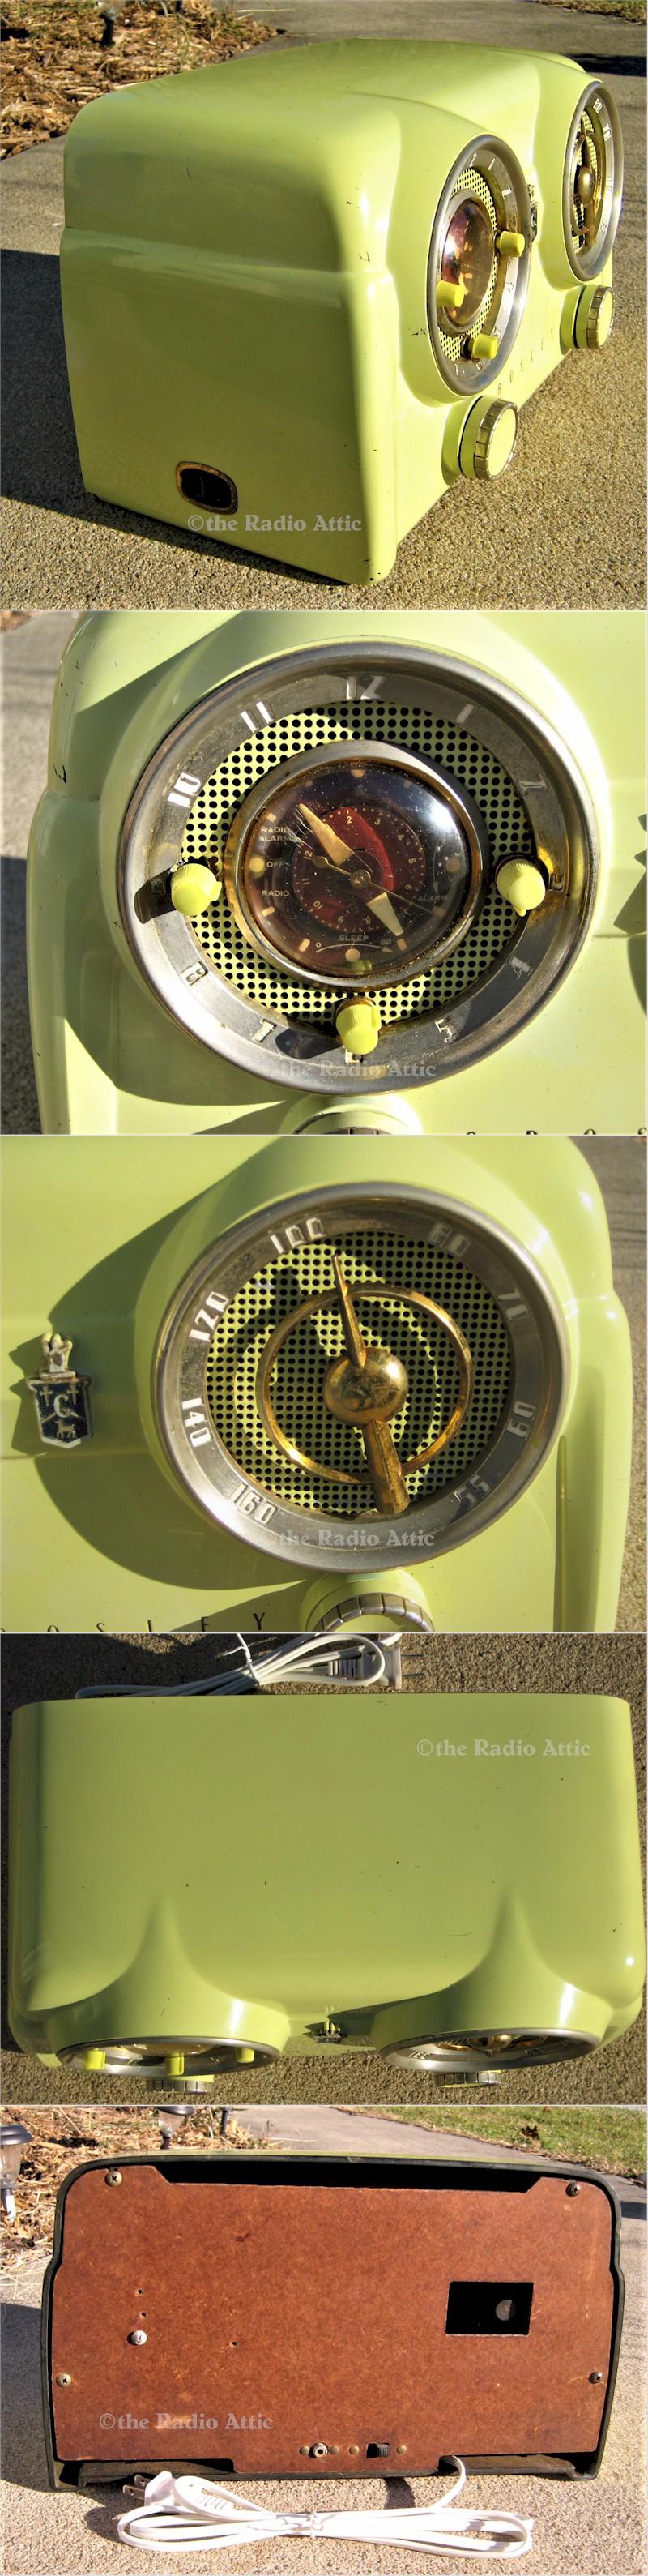 Crosley D-25CE "Dashboard" clock radio (1953)